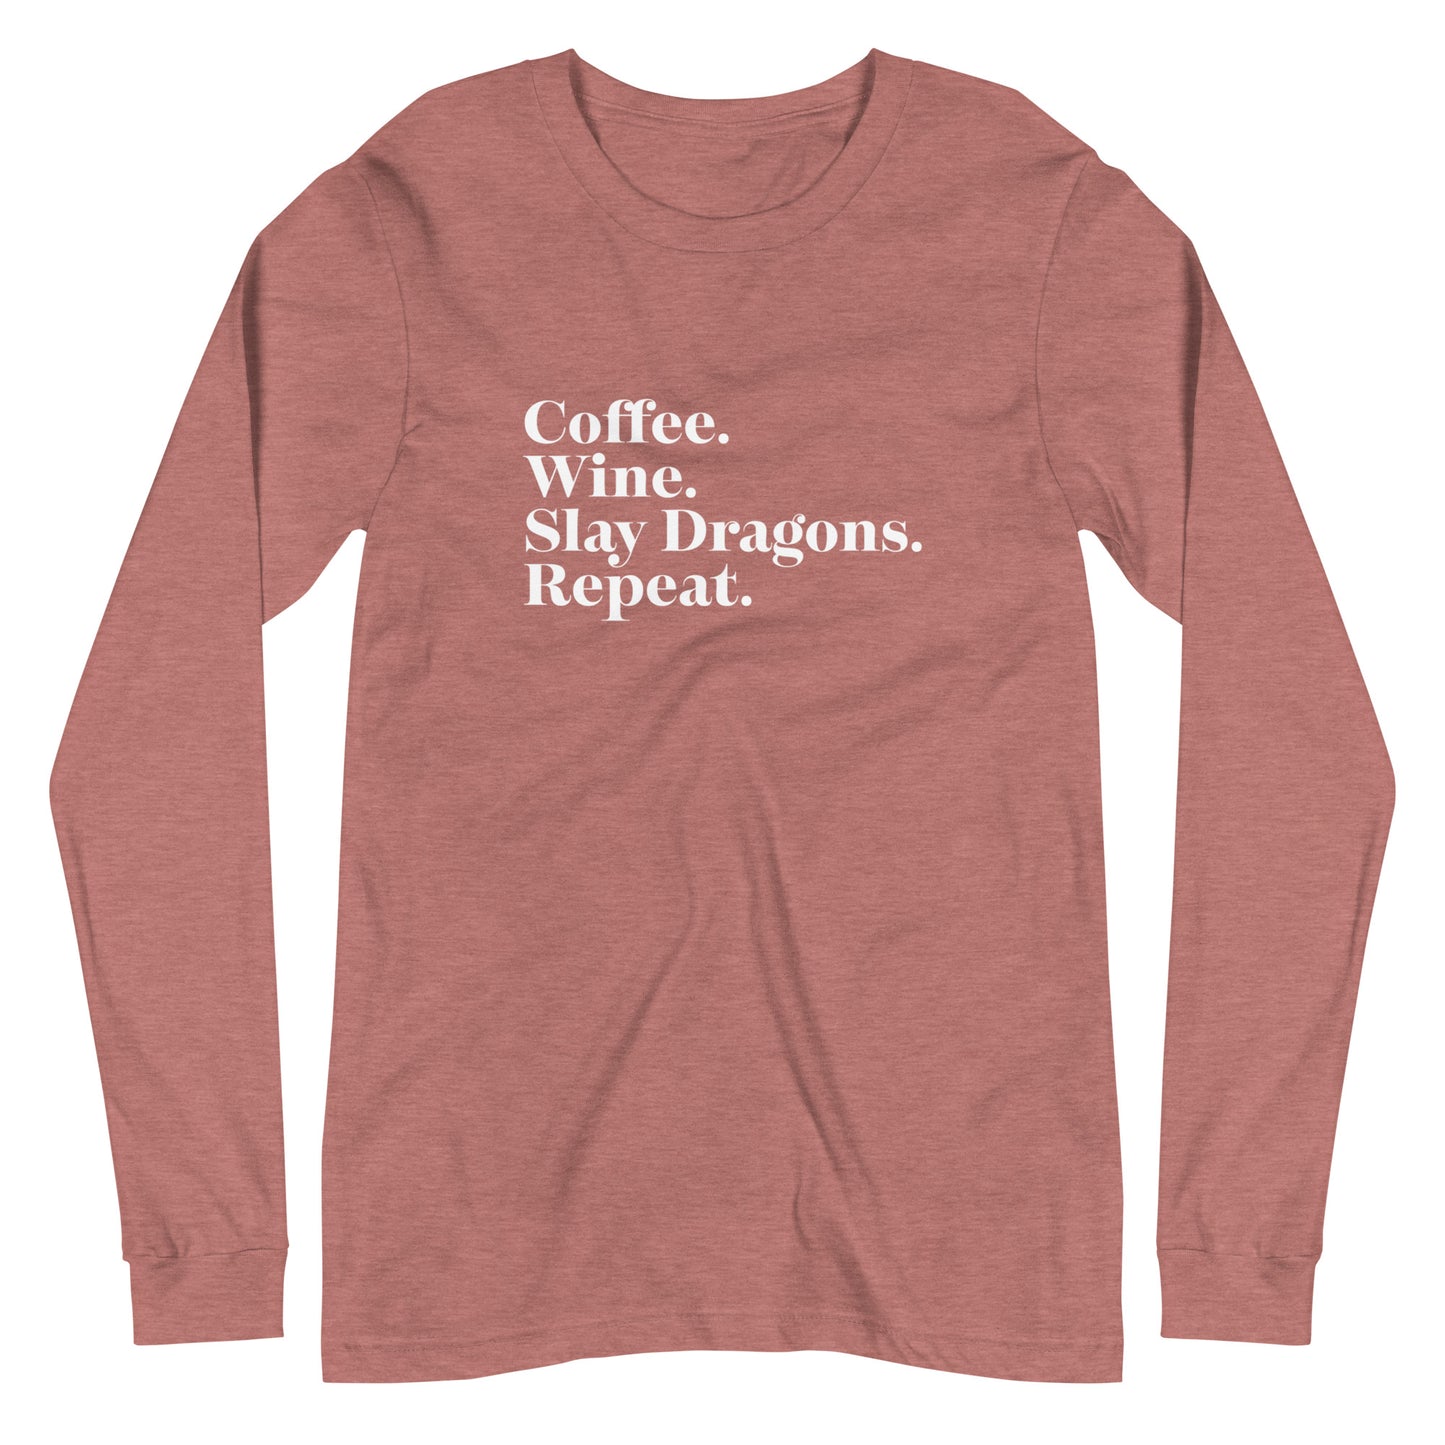 Coffee. Wine. Slay Dragons. Repeat. - Unisex Long Sleeve Tee